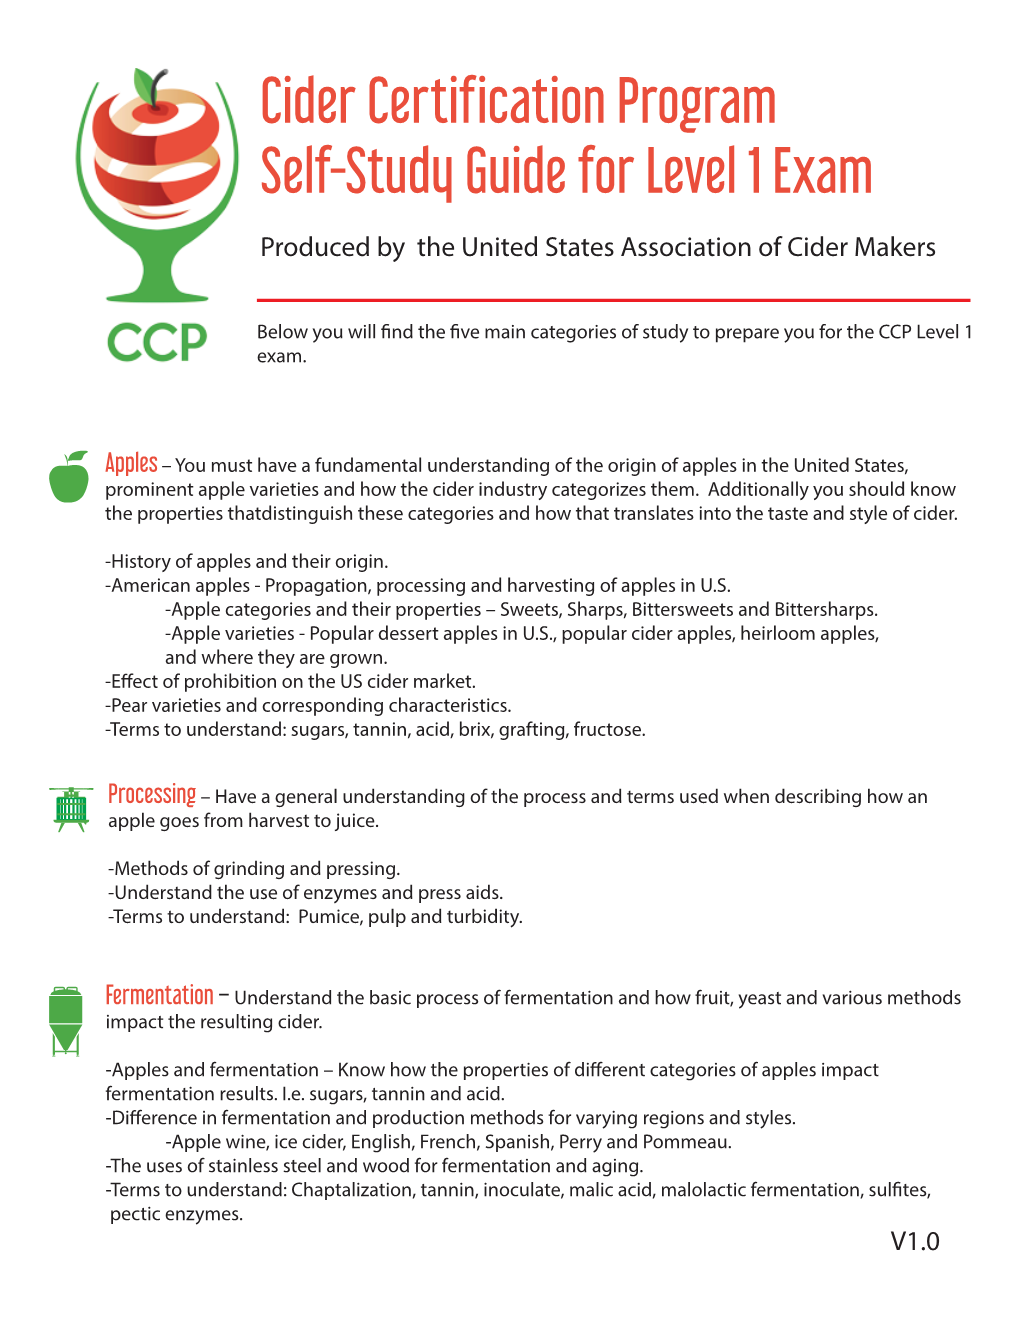 Cider Certification Program Self-Study Guide for Level 1 Exam